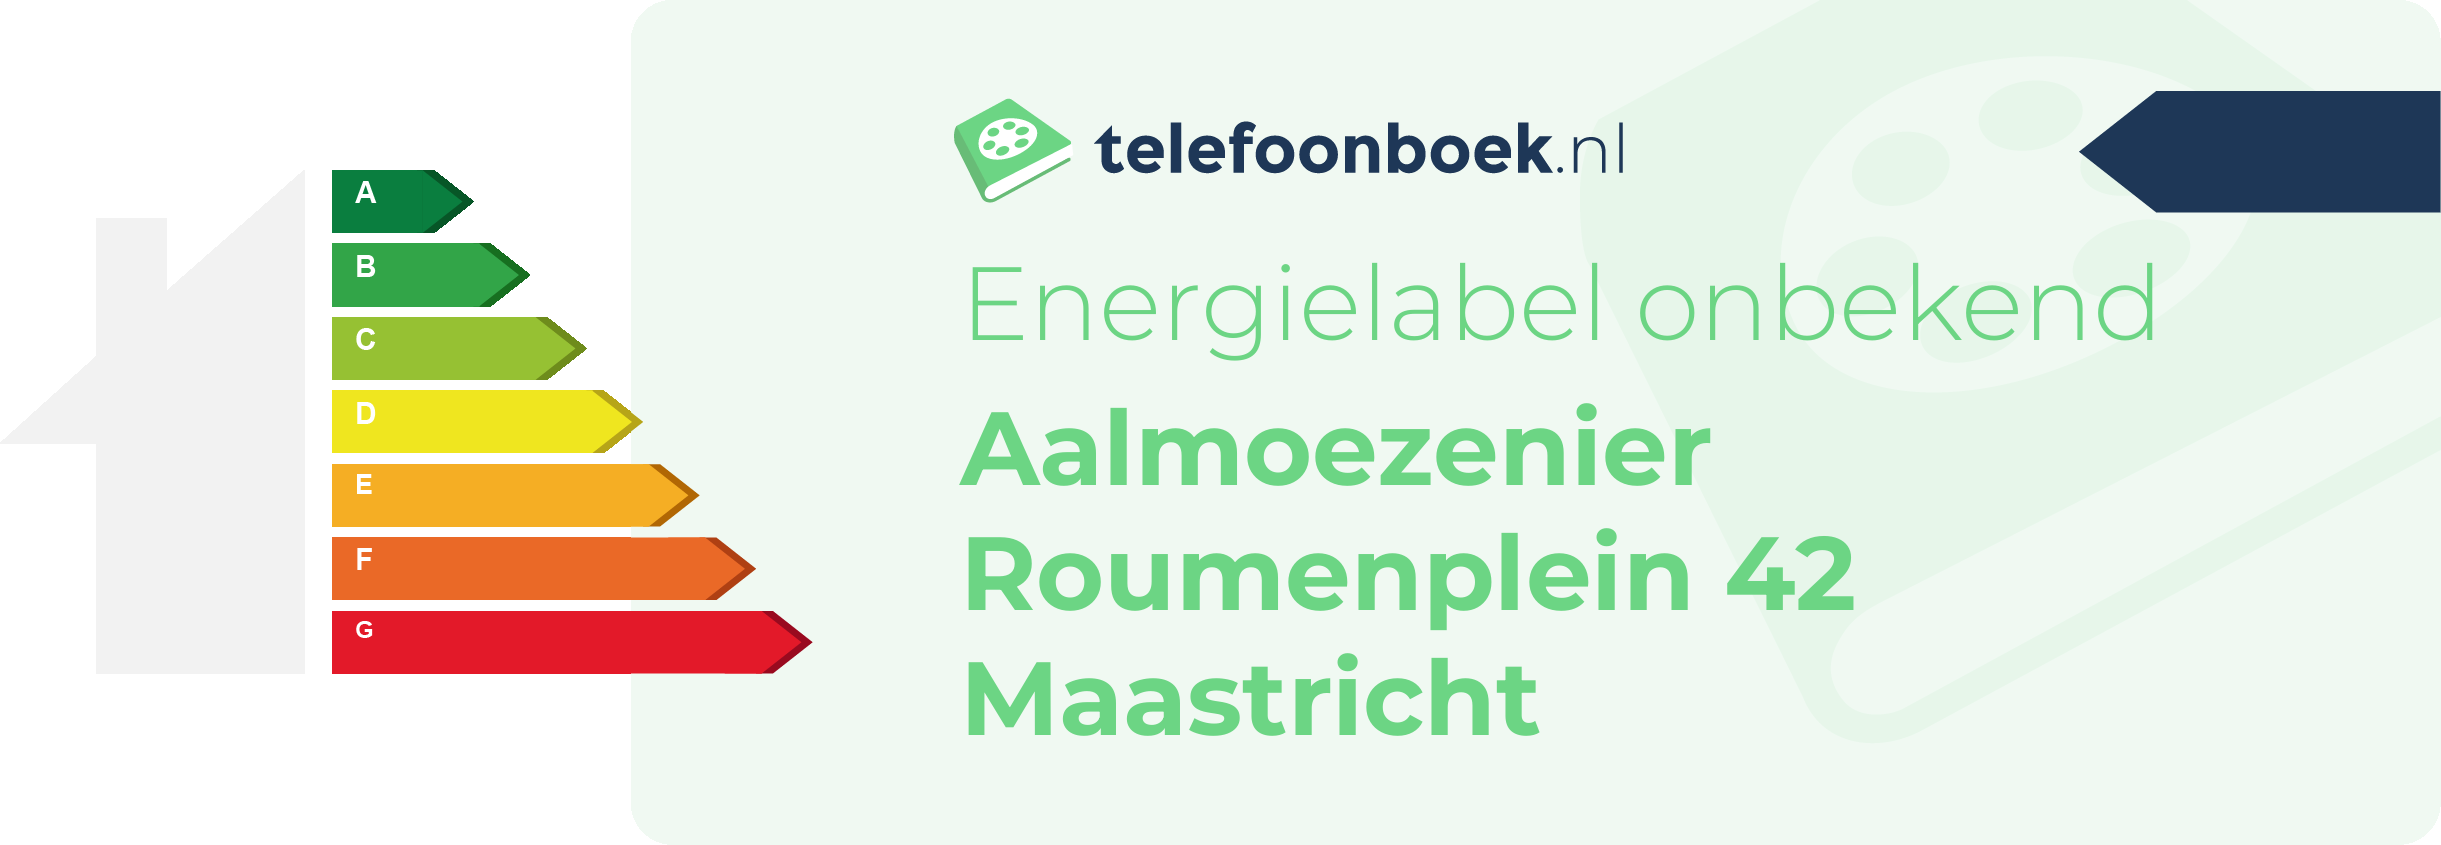 Energielabel Aalmoezenier Roumenplein 42 Maastricht